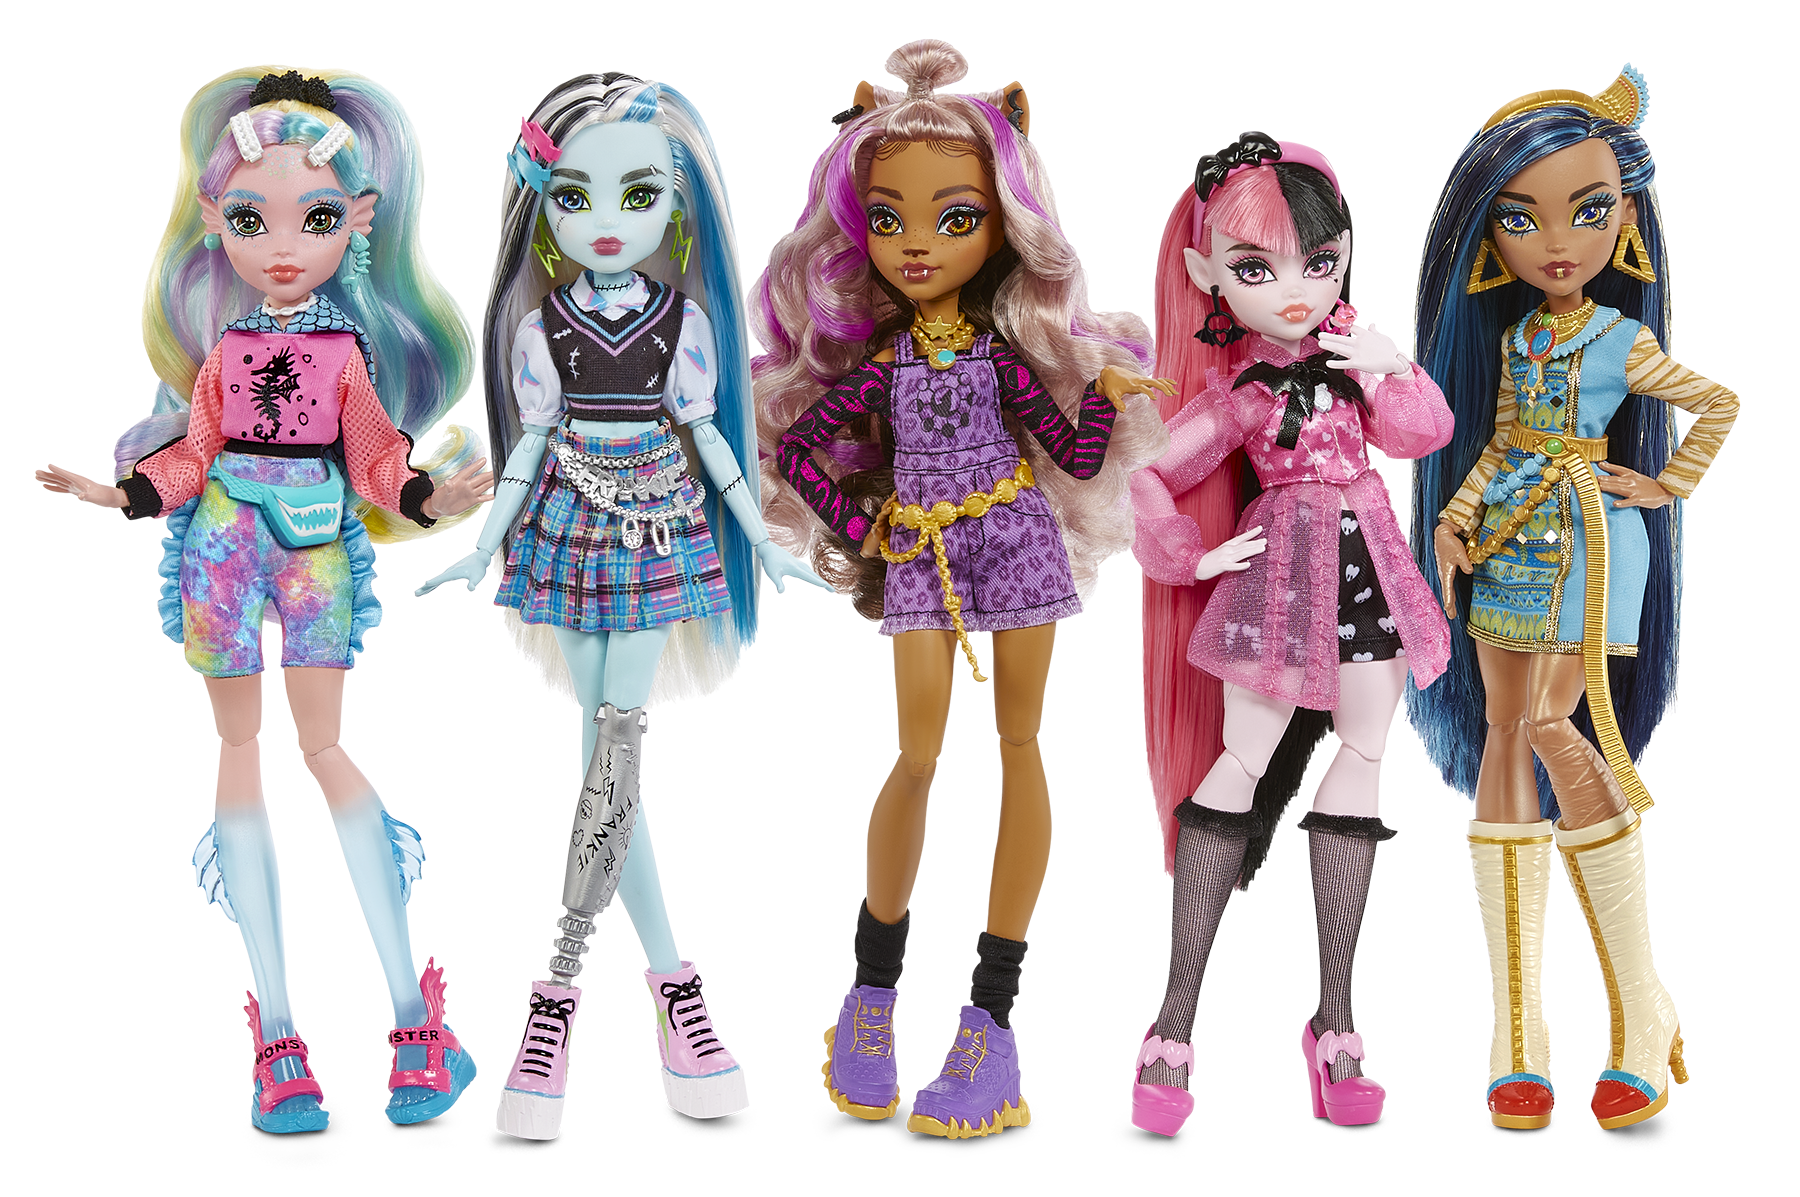 Monster High Draculaura G3 Generation 3 Reboot Doll Mattel 2022